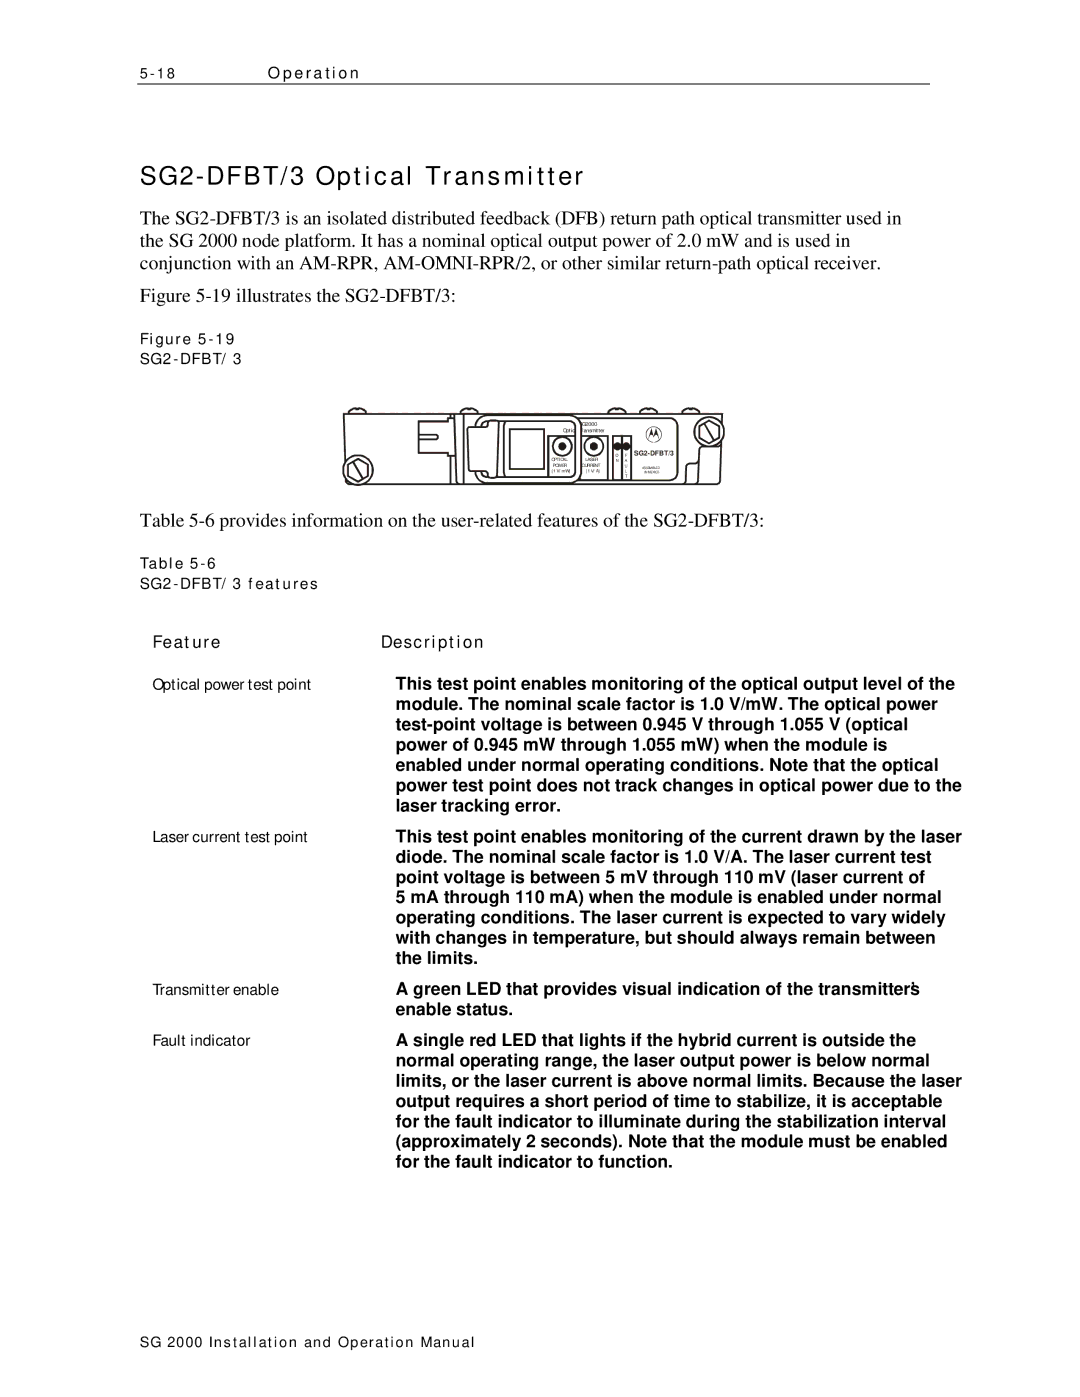 Motorola SG 2000 operation manual SG2 DFBT/3 Optical Transmitter, SG2-DFBT/3 features 